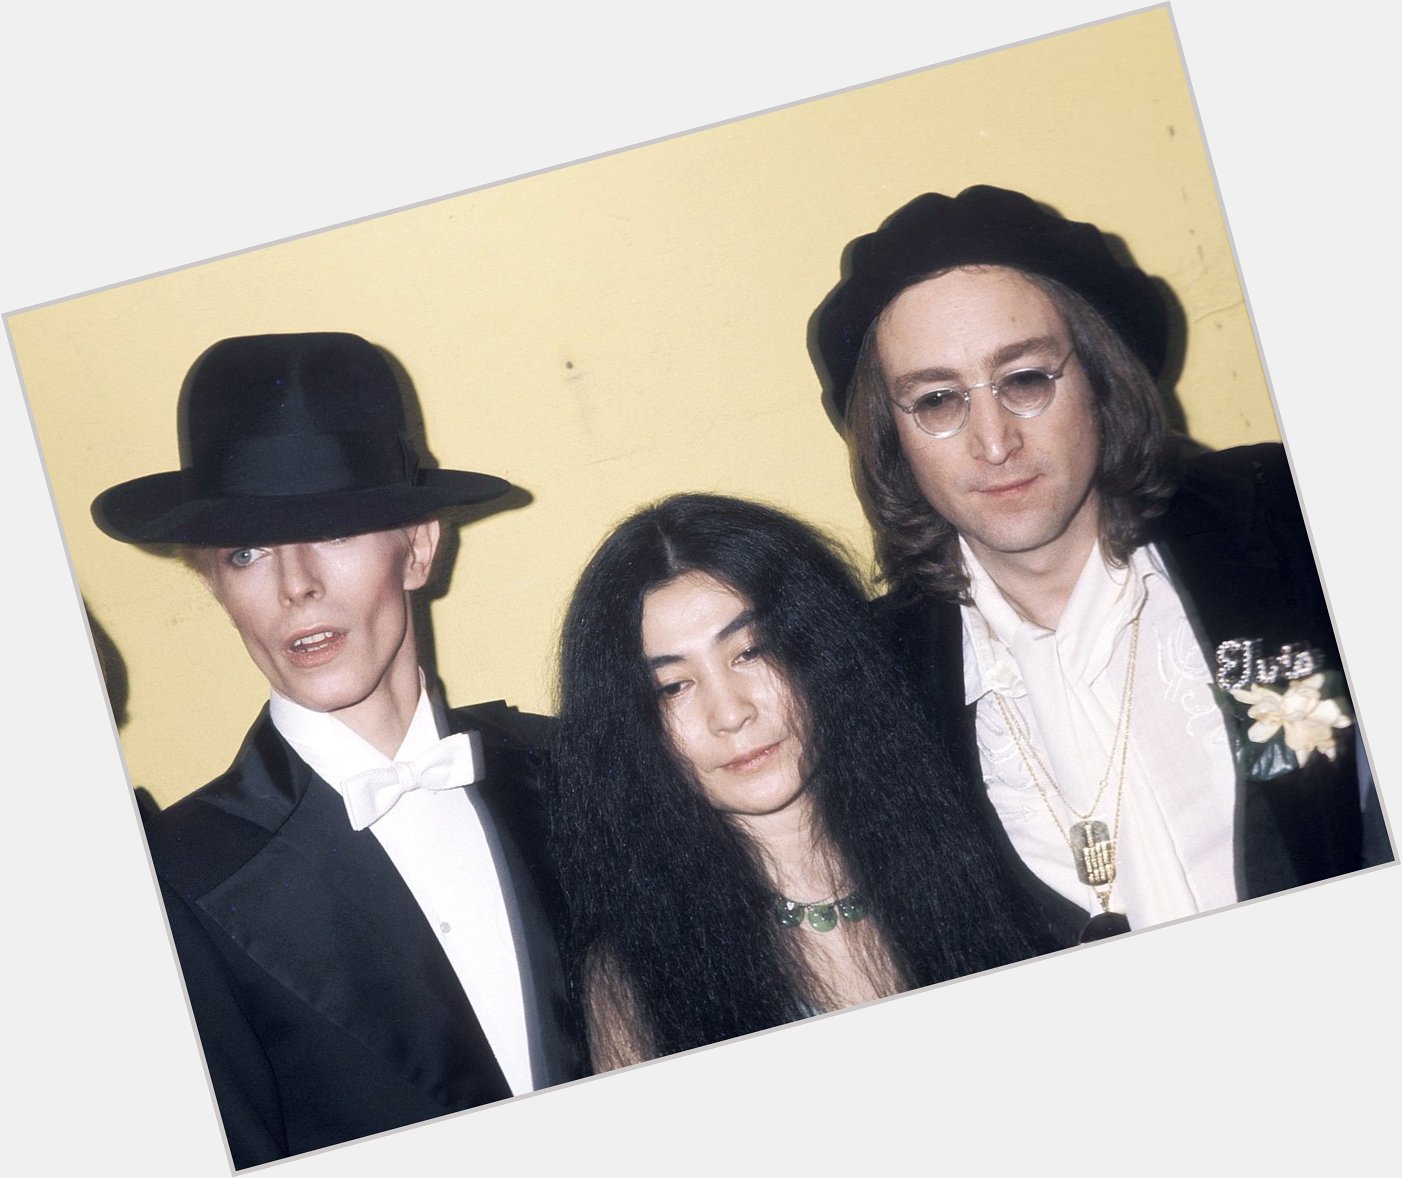 Wishing Yoko Ono a very Happy Birthday! 